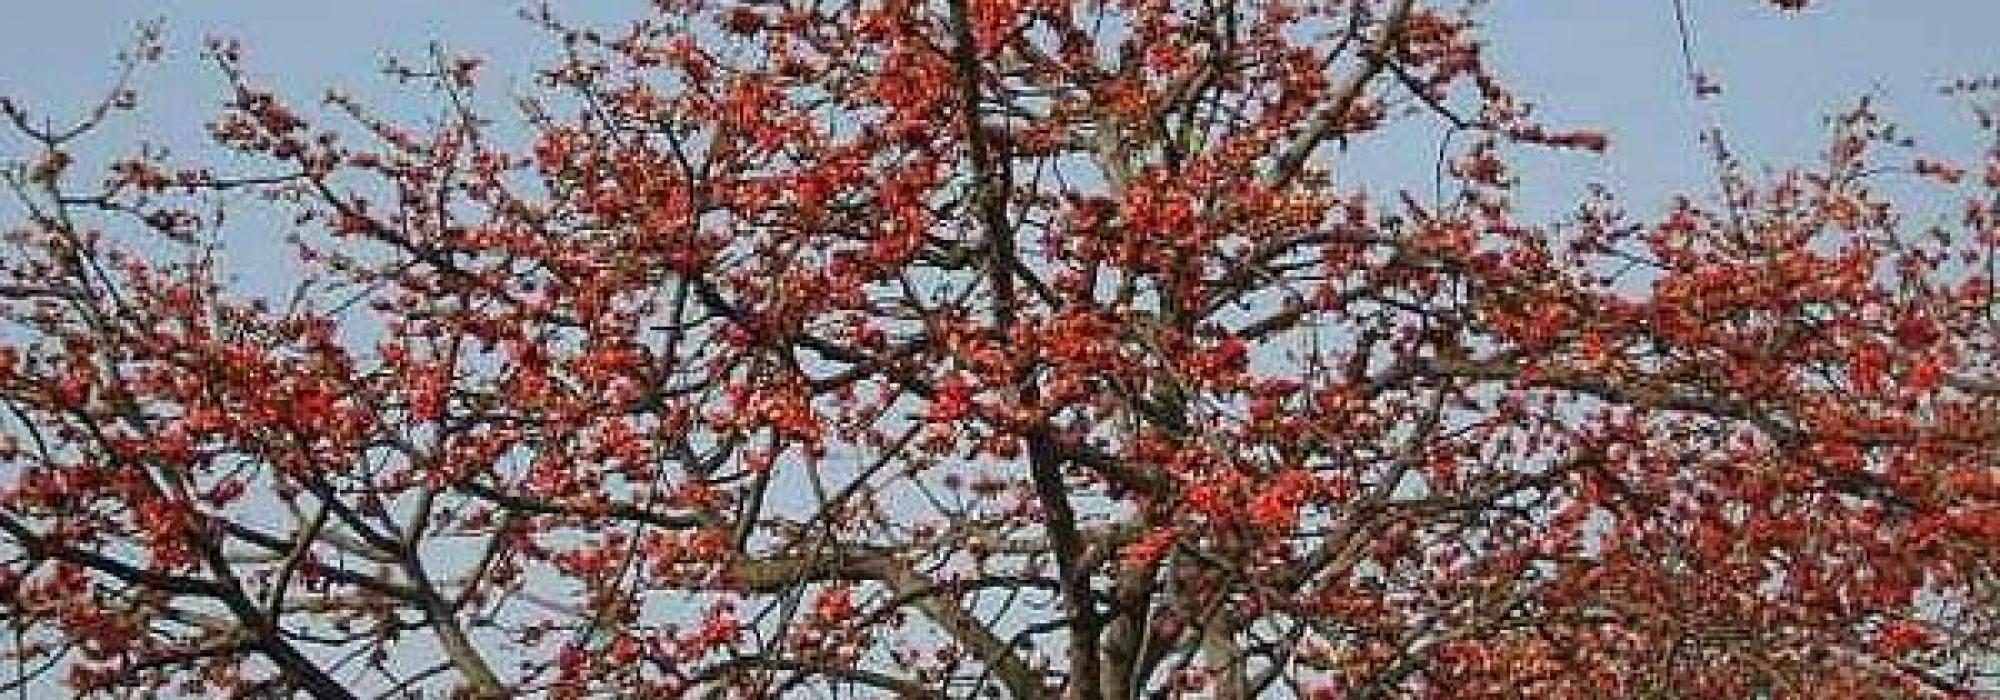 shalmali-tree